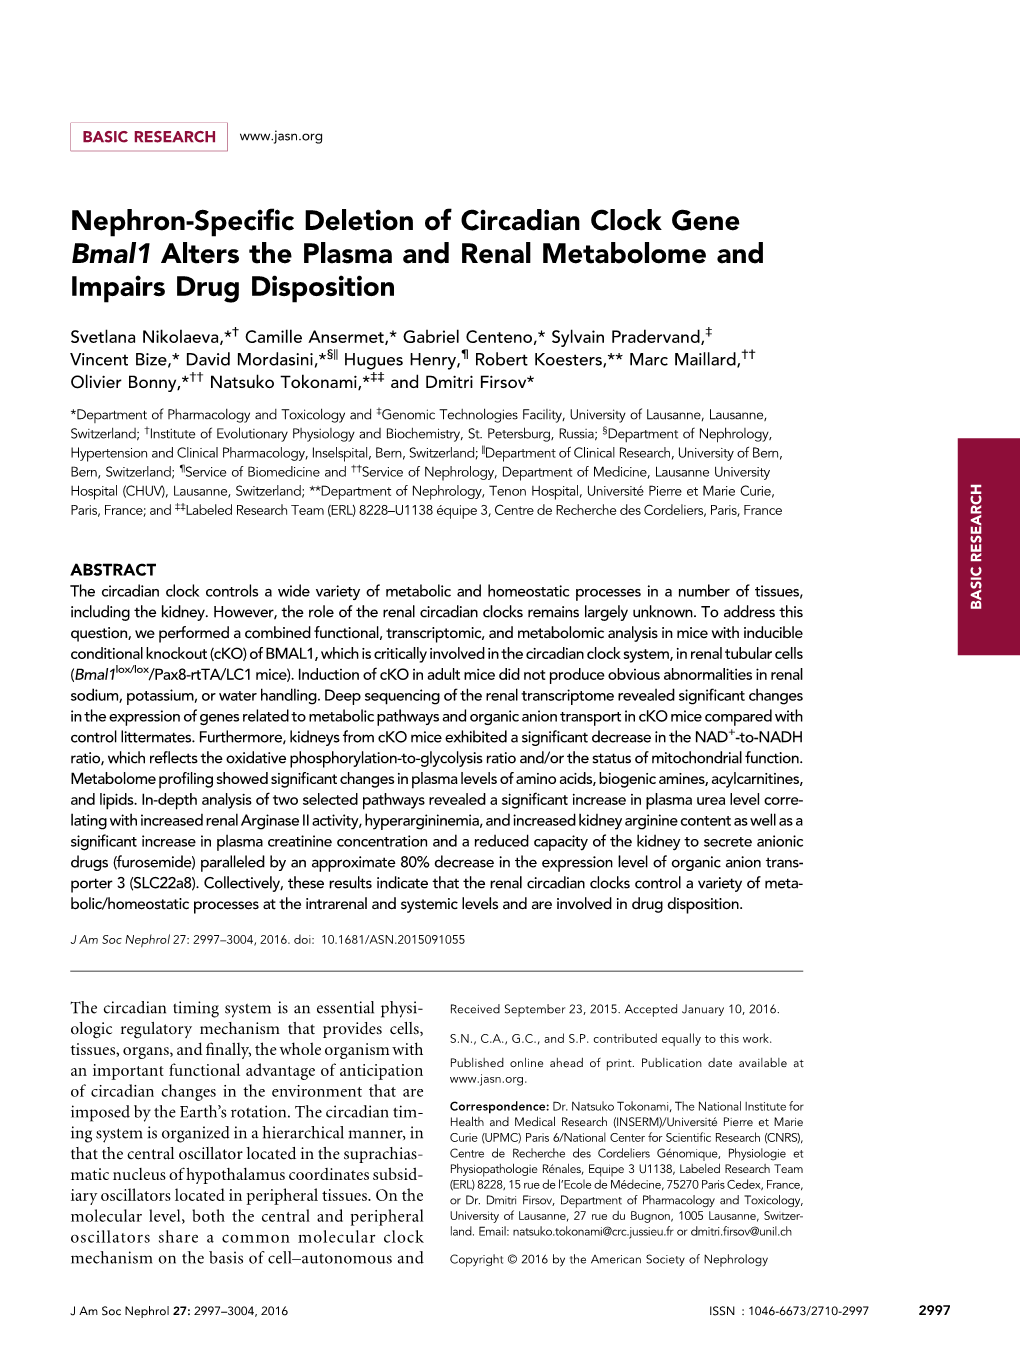 Nephron-Specific Deletion of Circadian Clock Gene Bmal1 Alters